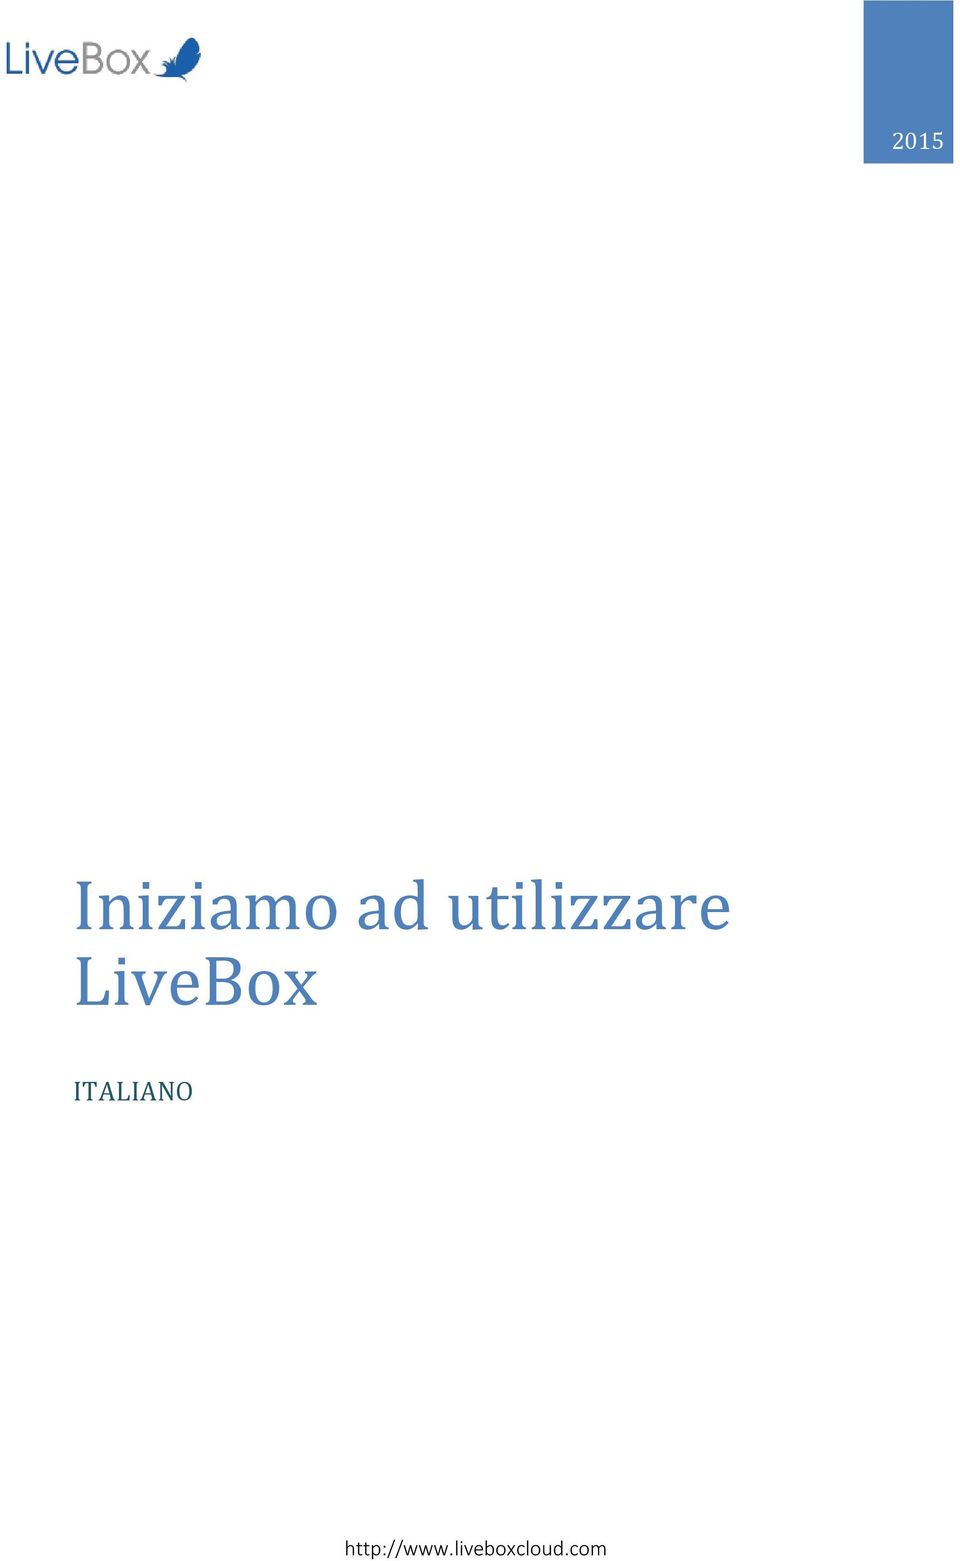 LiveBox ITALIANO